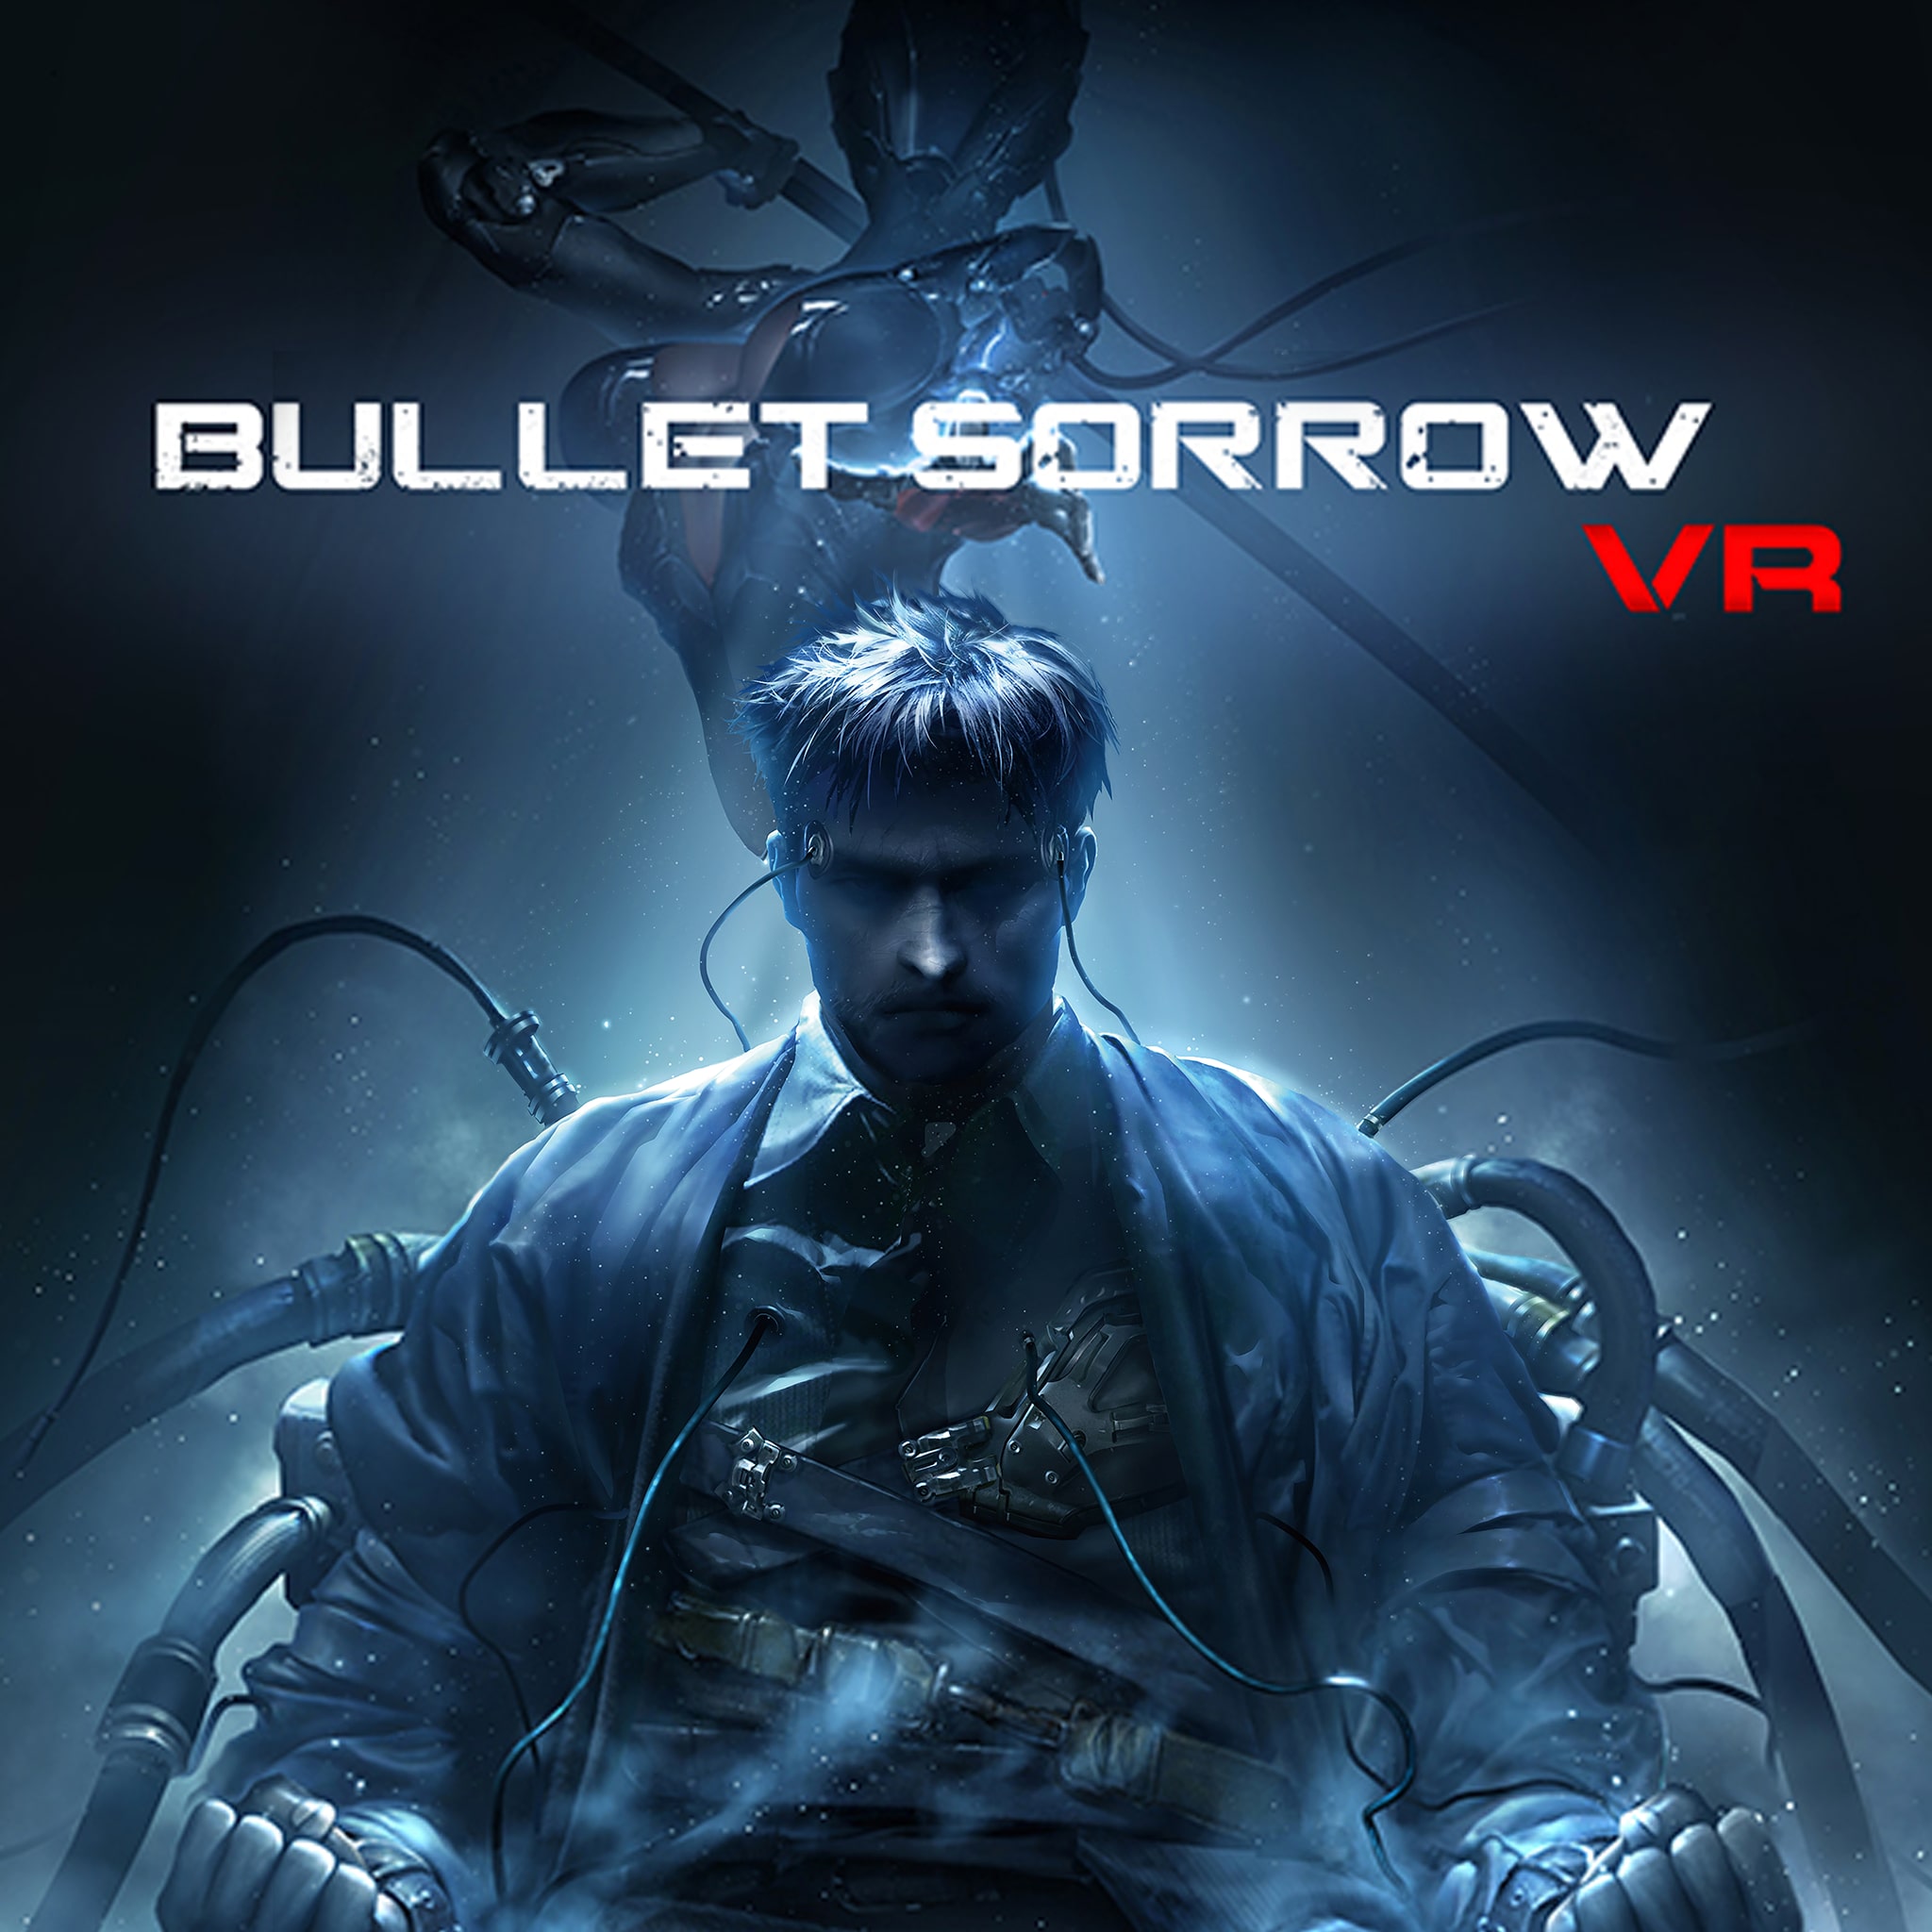 bullet sorrow vr review